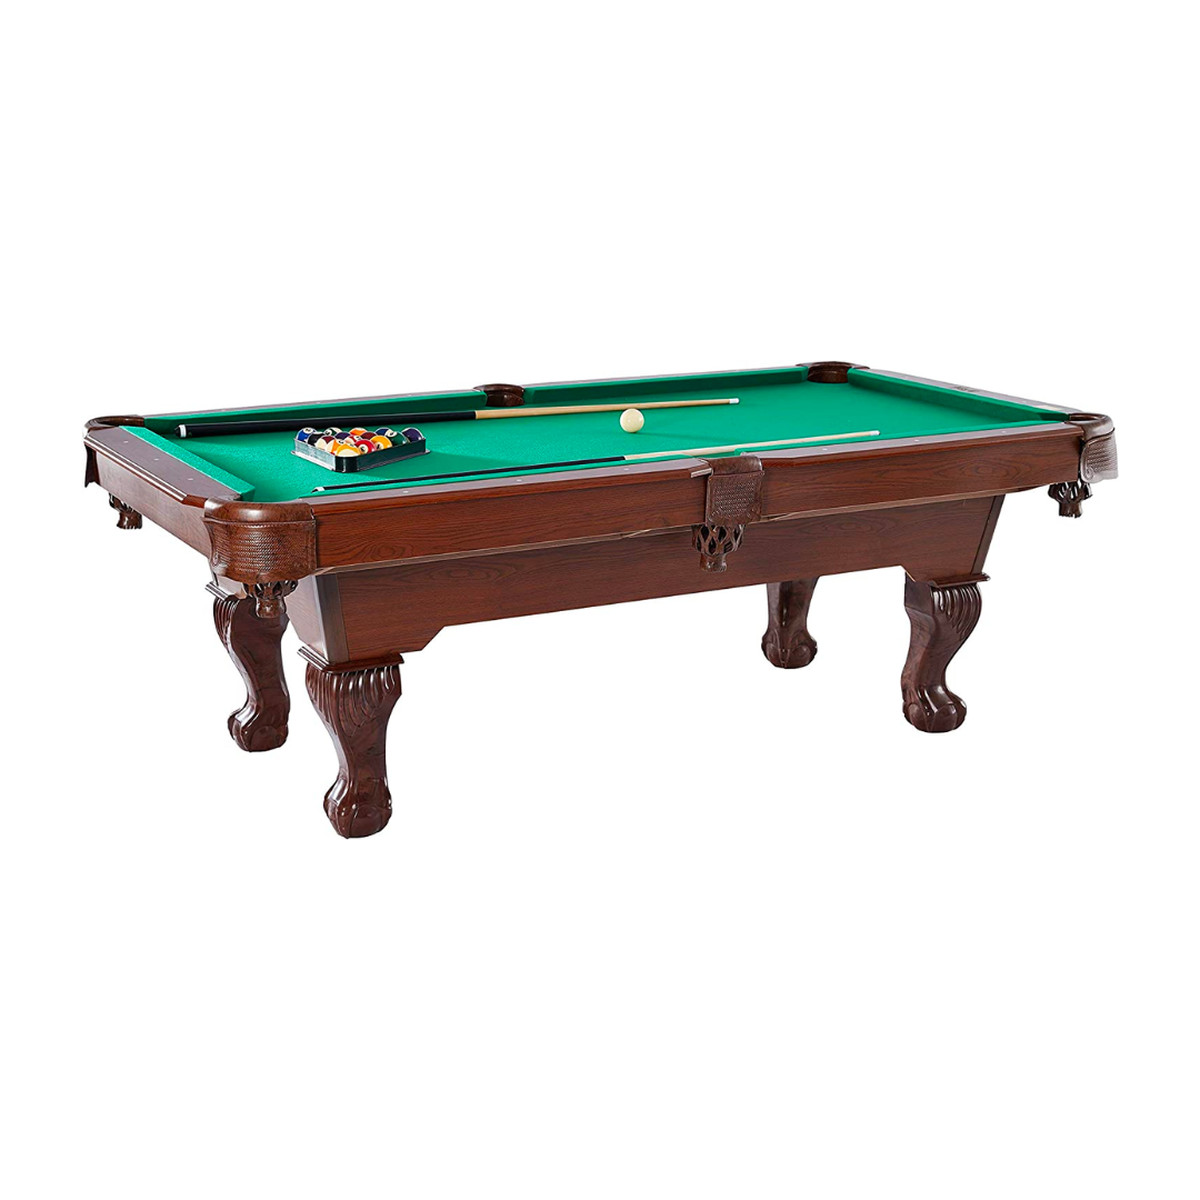 Barrington Billiards billiard pool table set with green felt, pool cues, cue ball, set of balls and rack